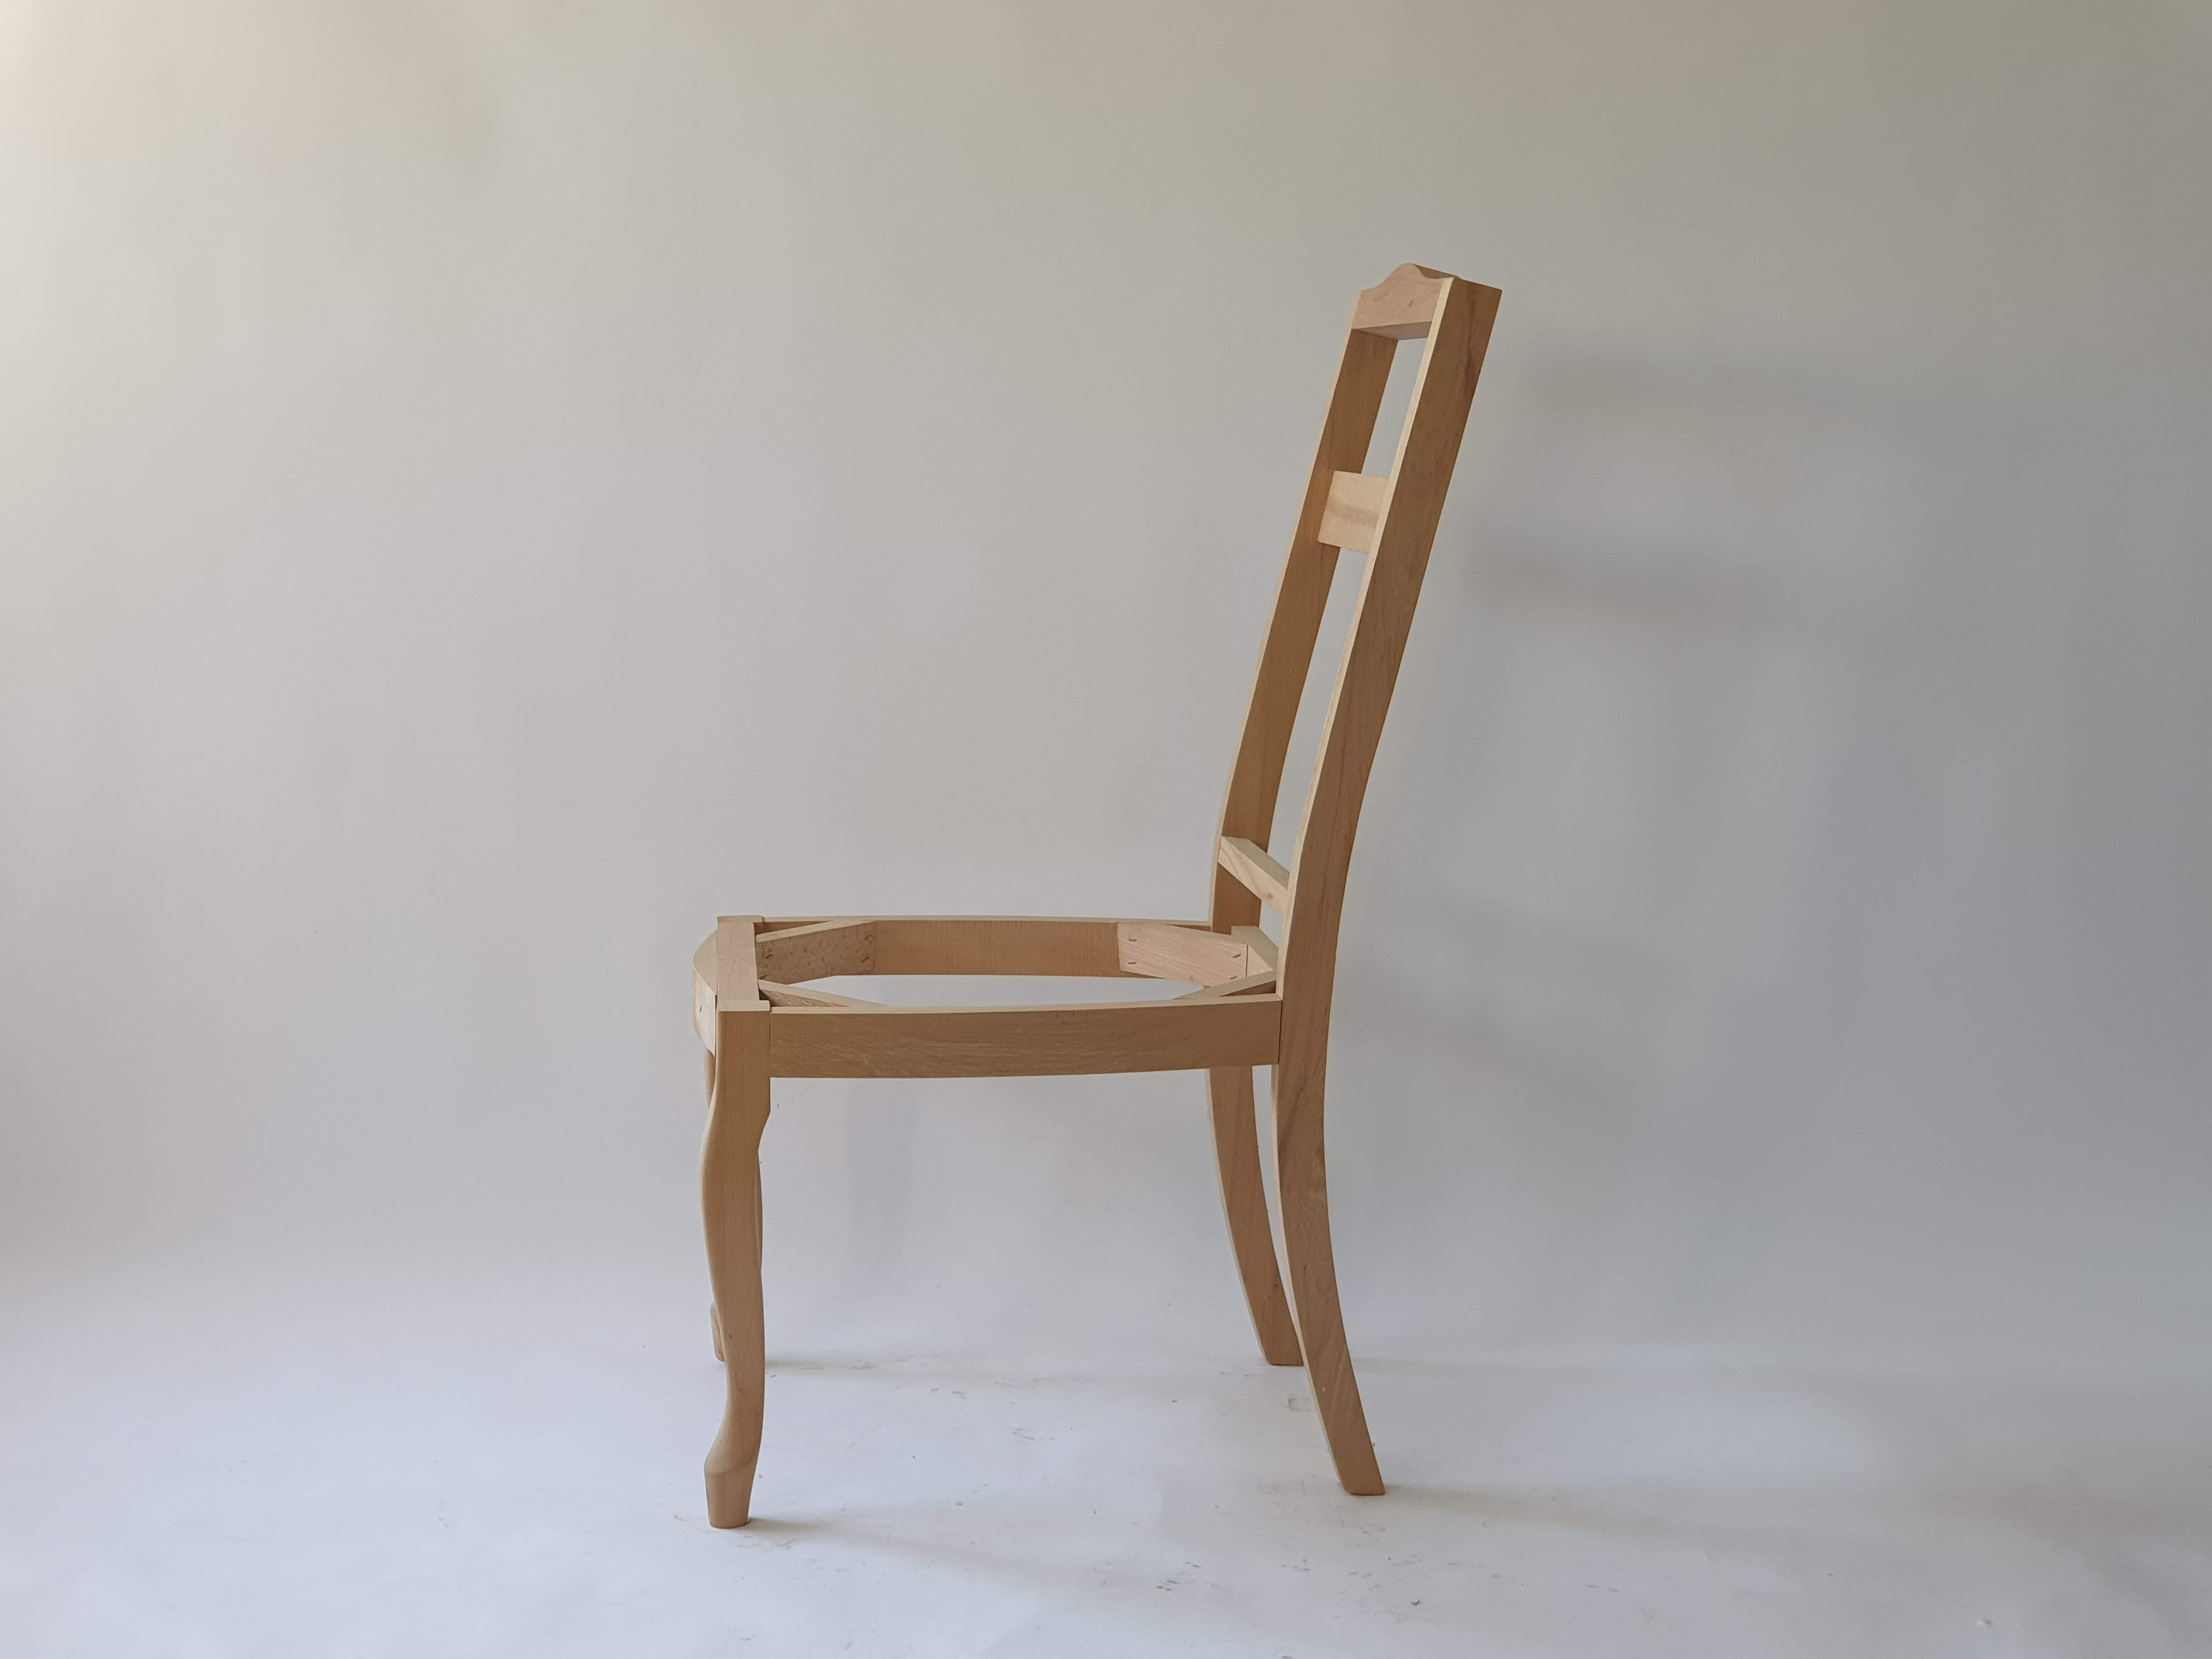 solidarity tail Feel bad Schelet scaune din lemn tapitate comode | Anteco - Spatii industriale de  inchiriat pentru depozitare si productie in Ploiesti,lichidare de stoc la  scaune restaurant,scaune din lemn, mobila cafenea, hale industriale de  inchiriat